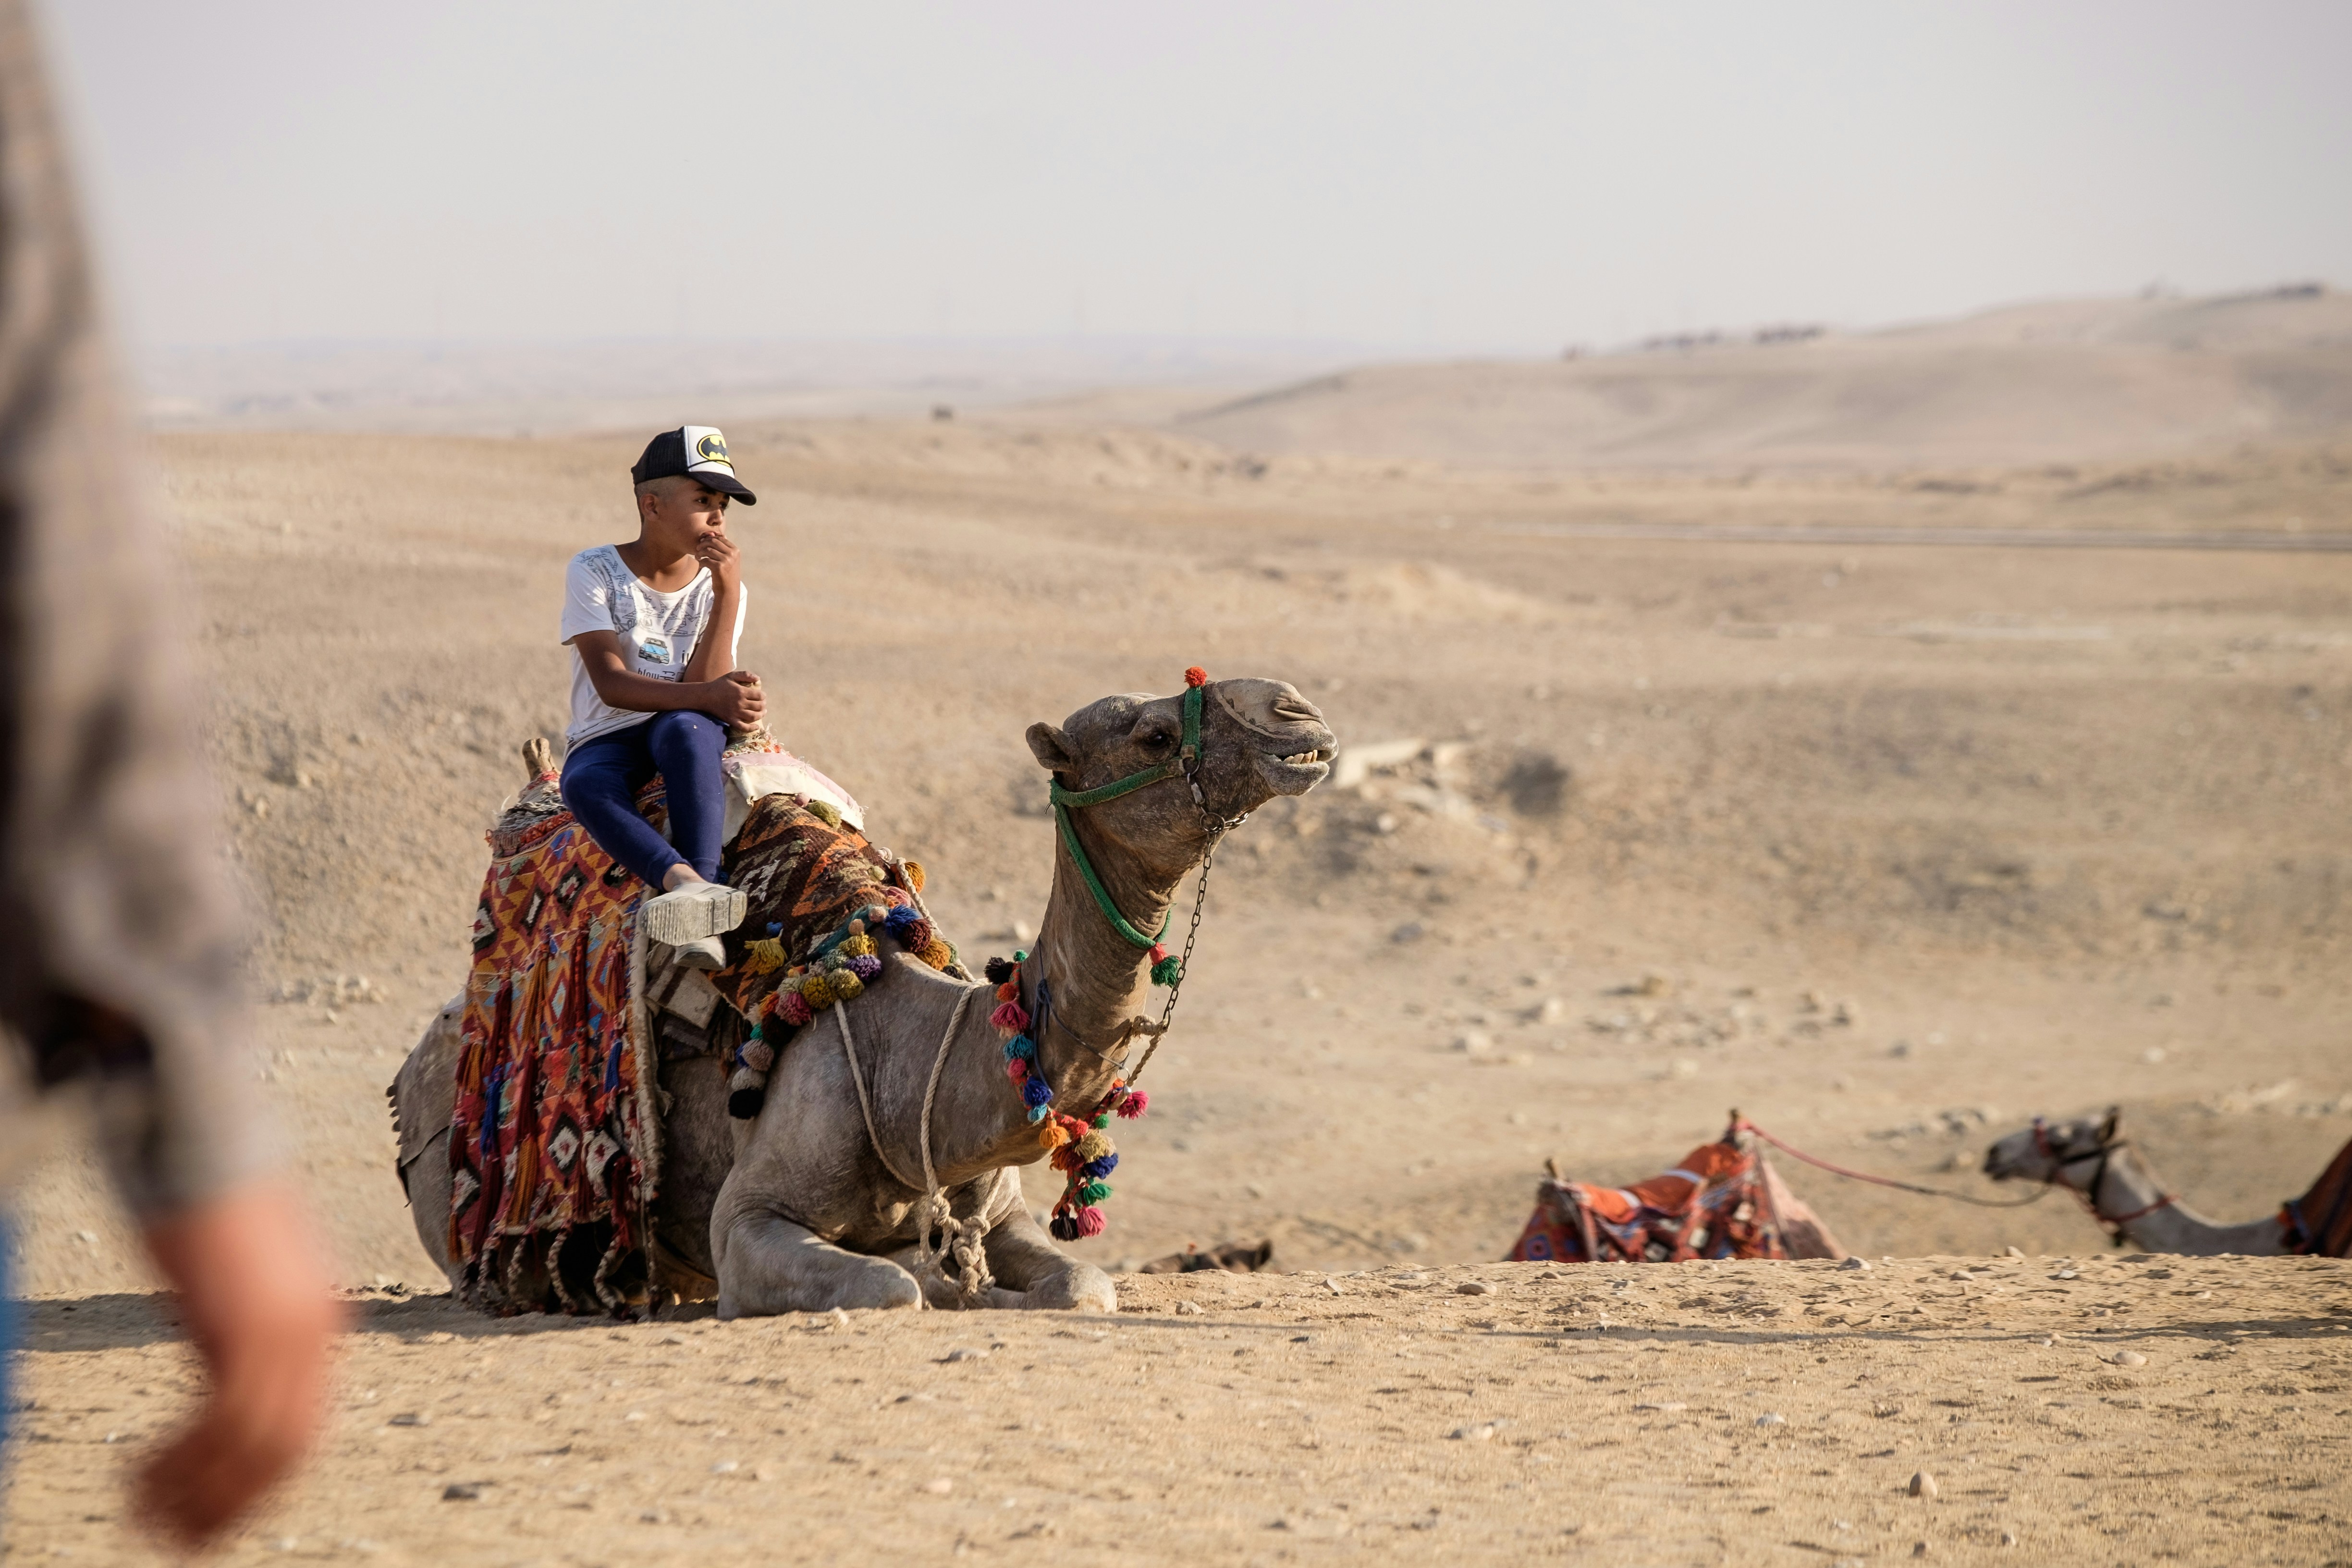 A child on a Camel, near Giza Pyramids.